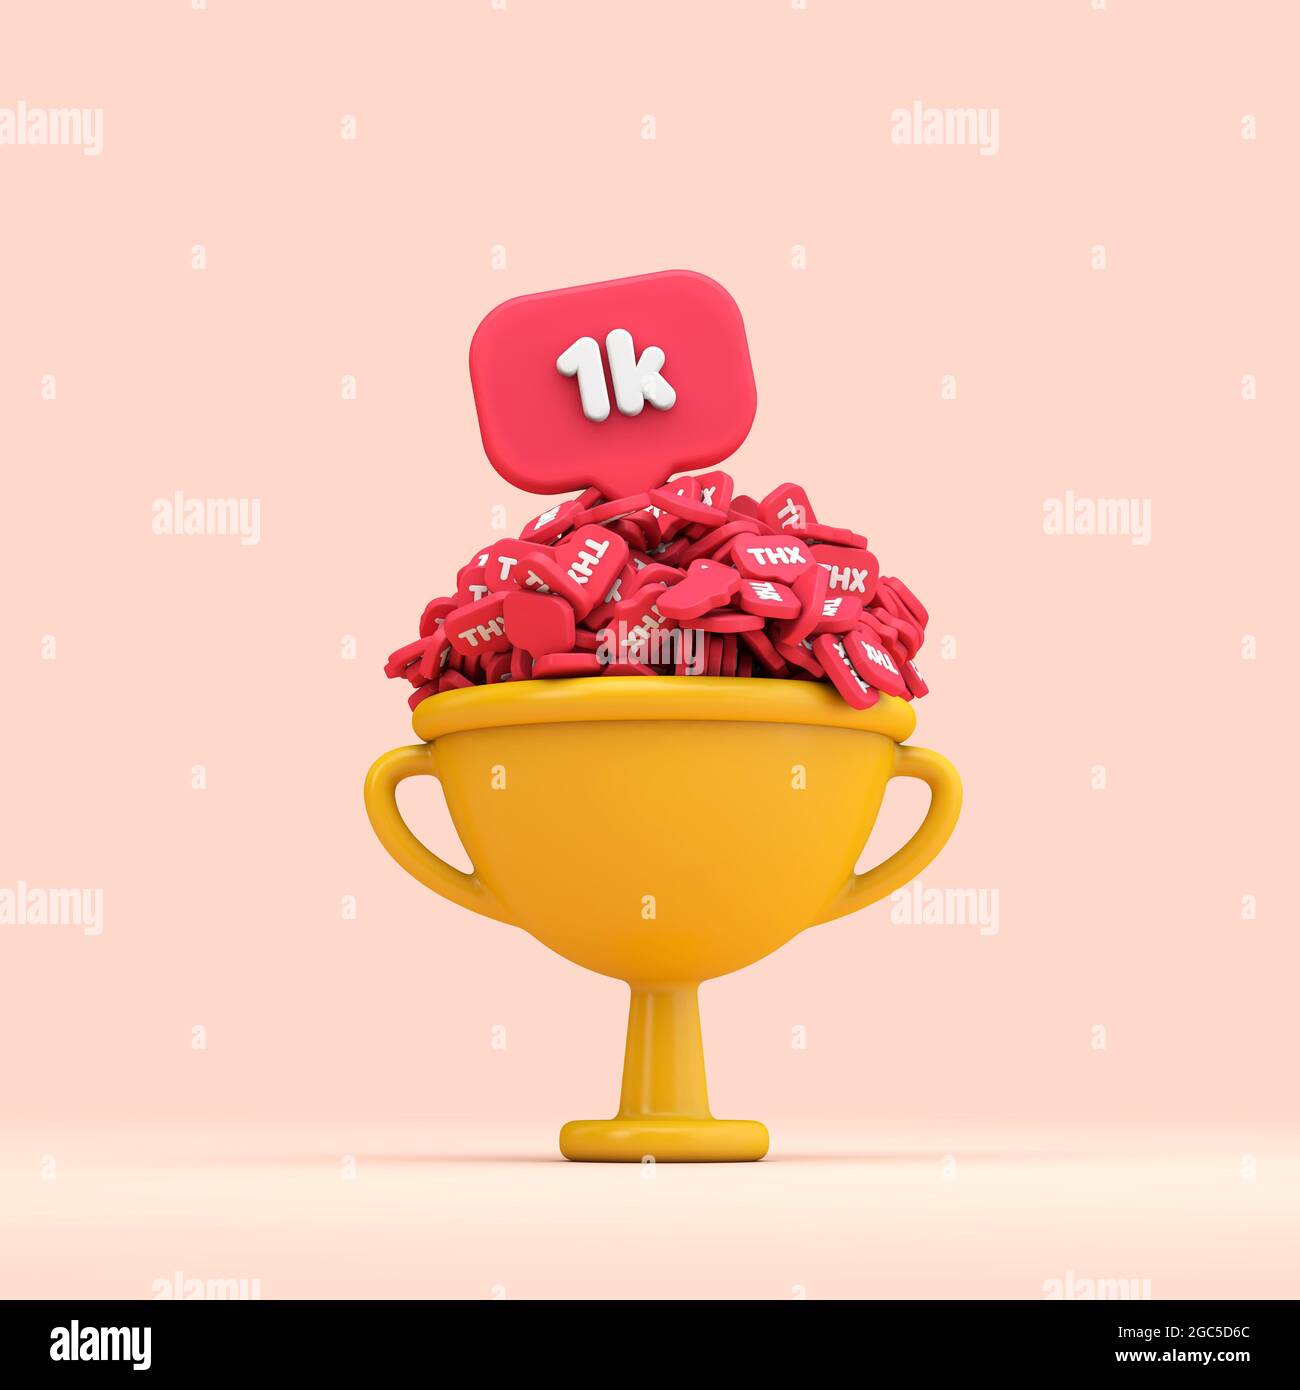 Thank you 1k social media followers celebration trophy. 3D render Stock Photo